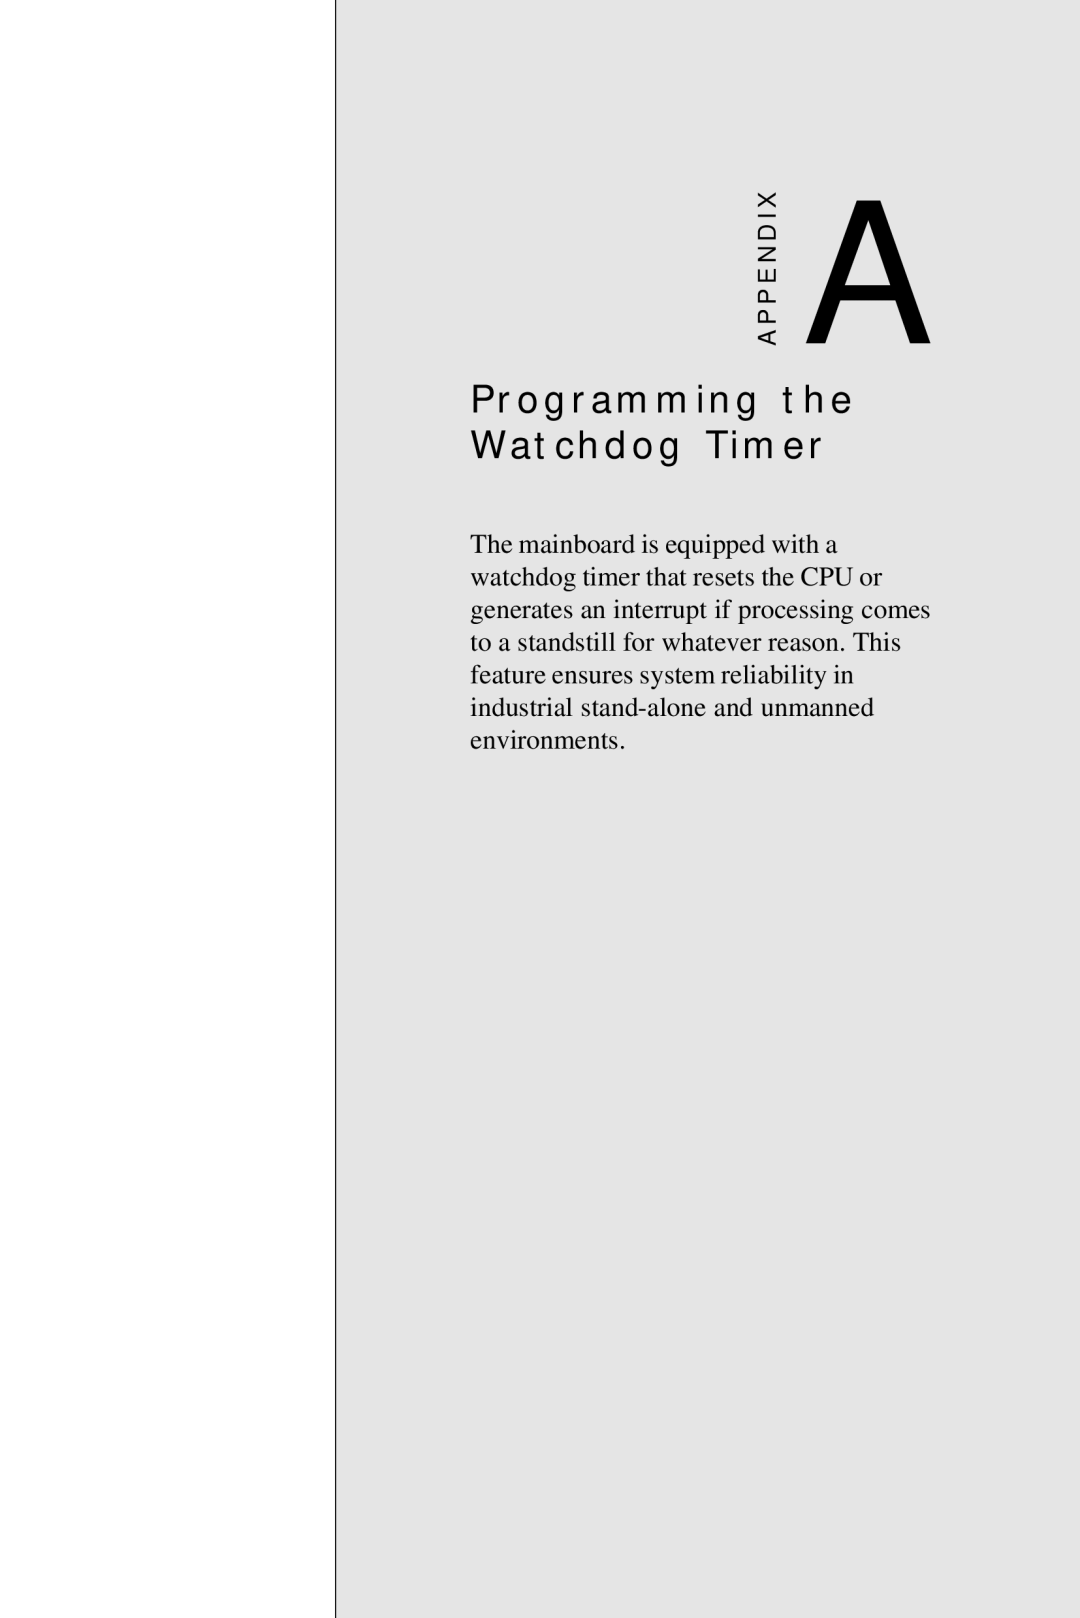 IBM All-in-One FC/Socket 370 Celeron, PCM-6890B manual Programming the Watchdog Timer 